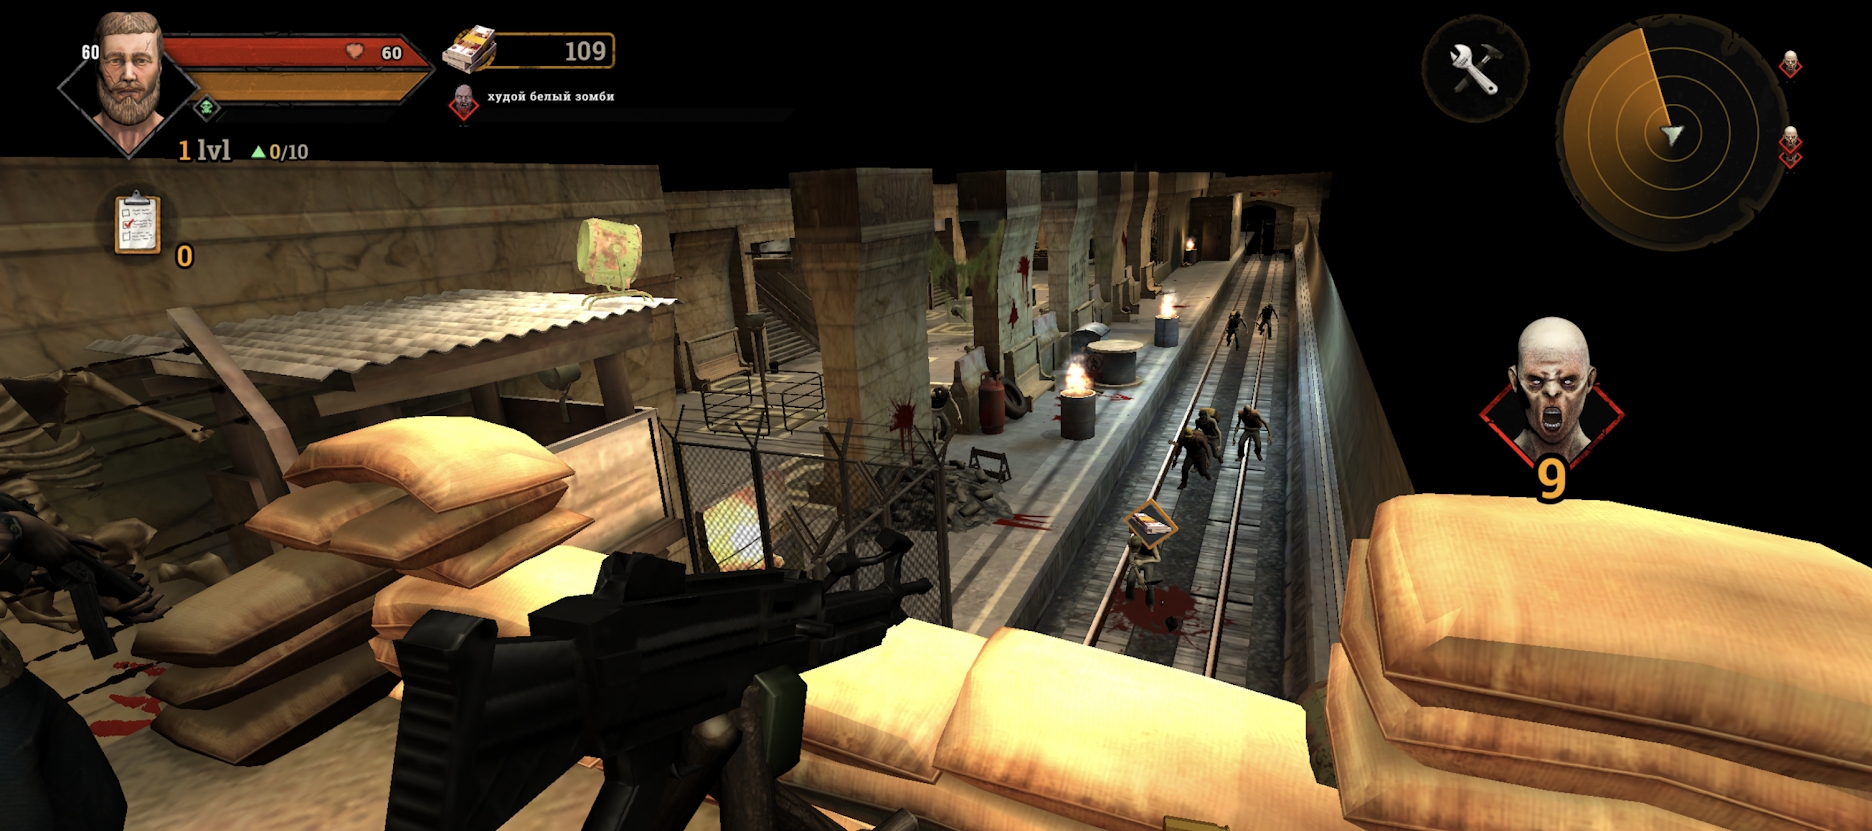 Metro Survival game, Zombie Hunter(Global server)